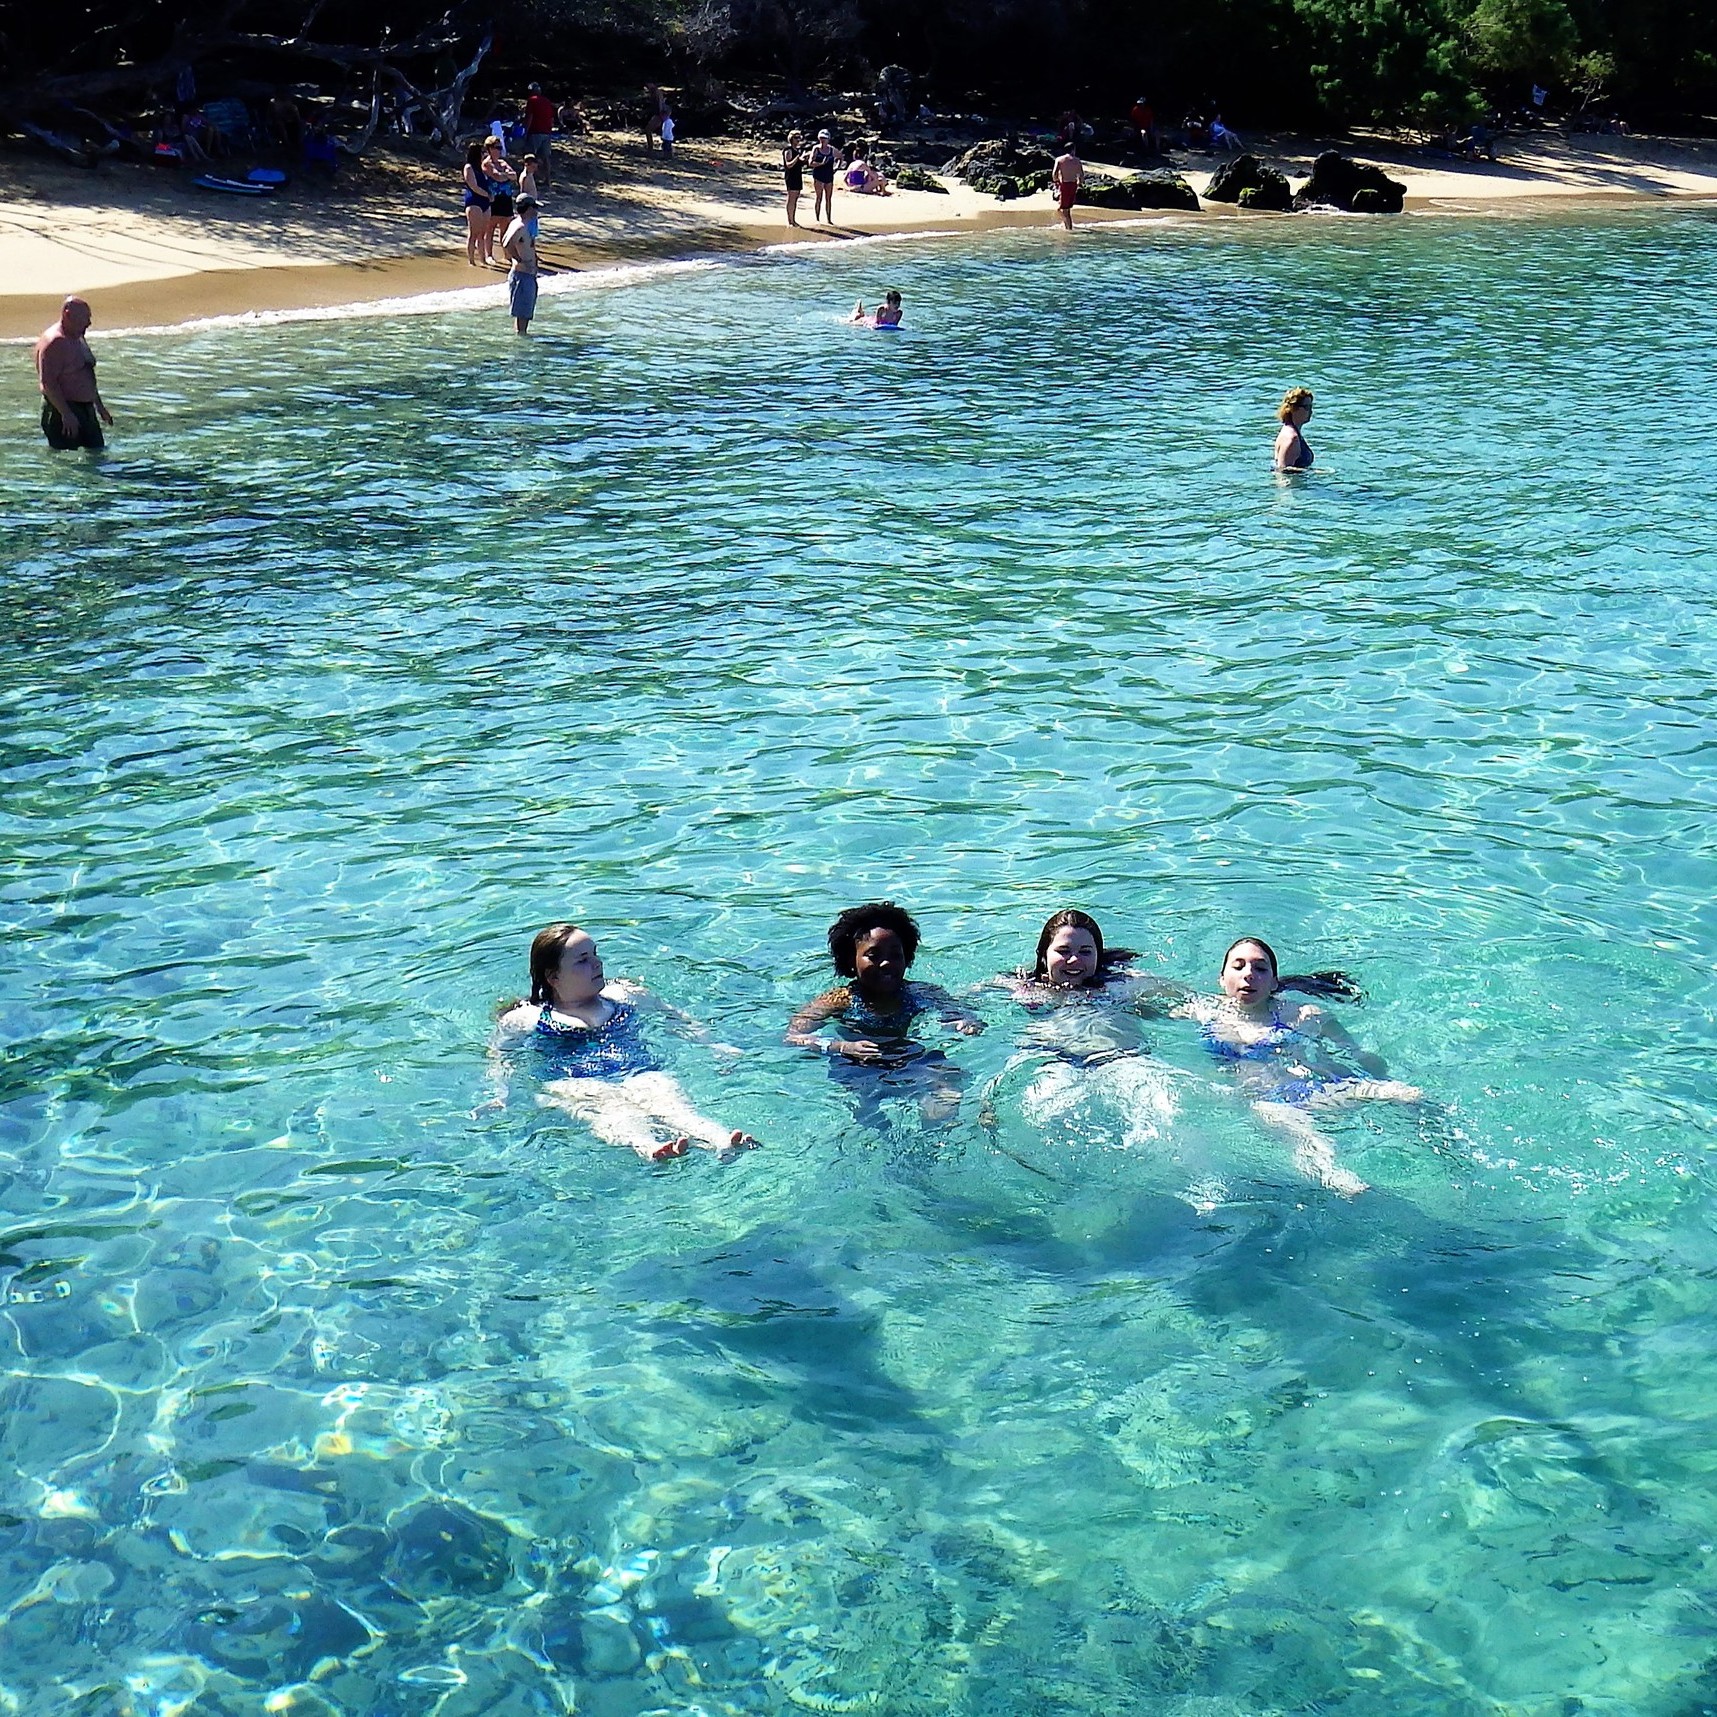 Beach 69 - Hawaii's magical waters